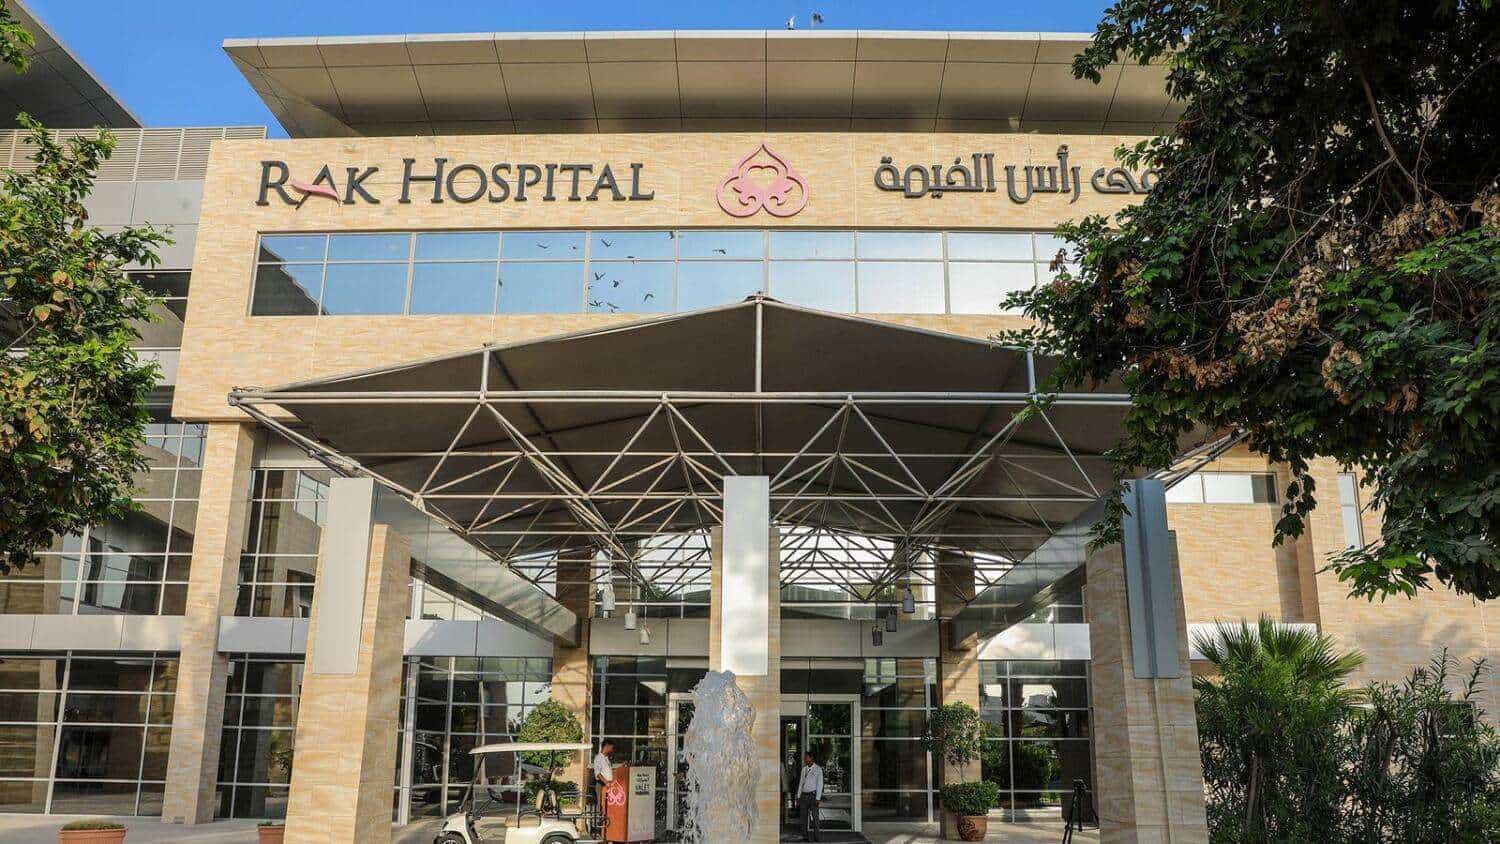 RAK Hospital in Ras Al Khaimah